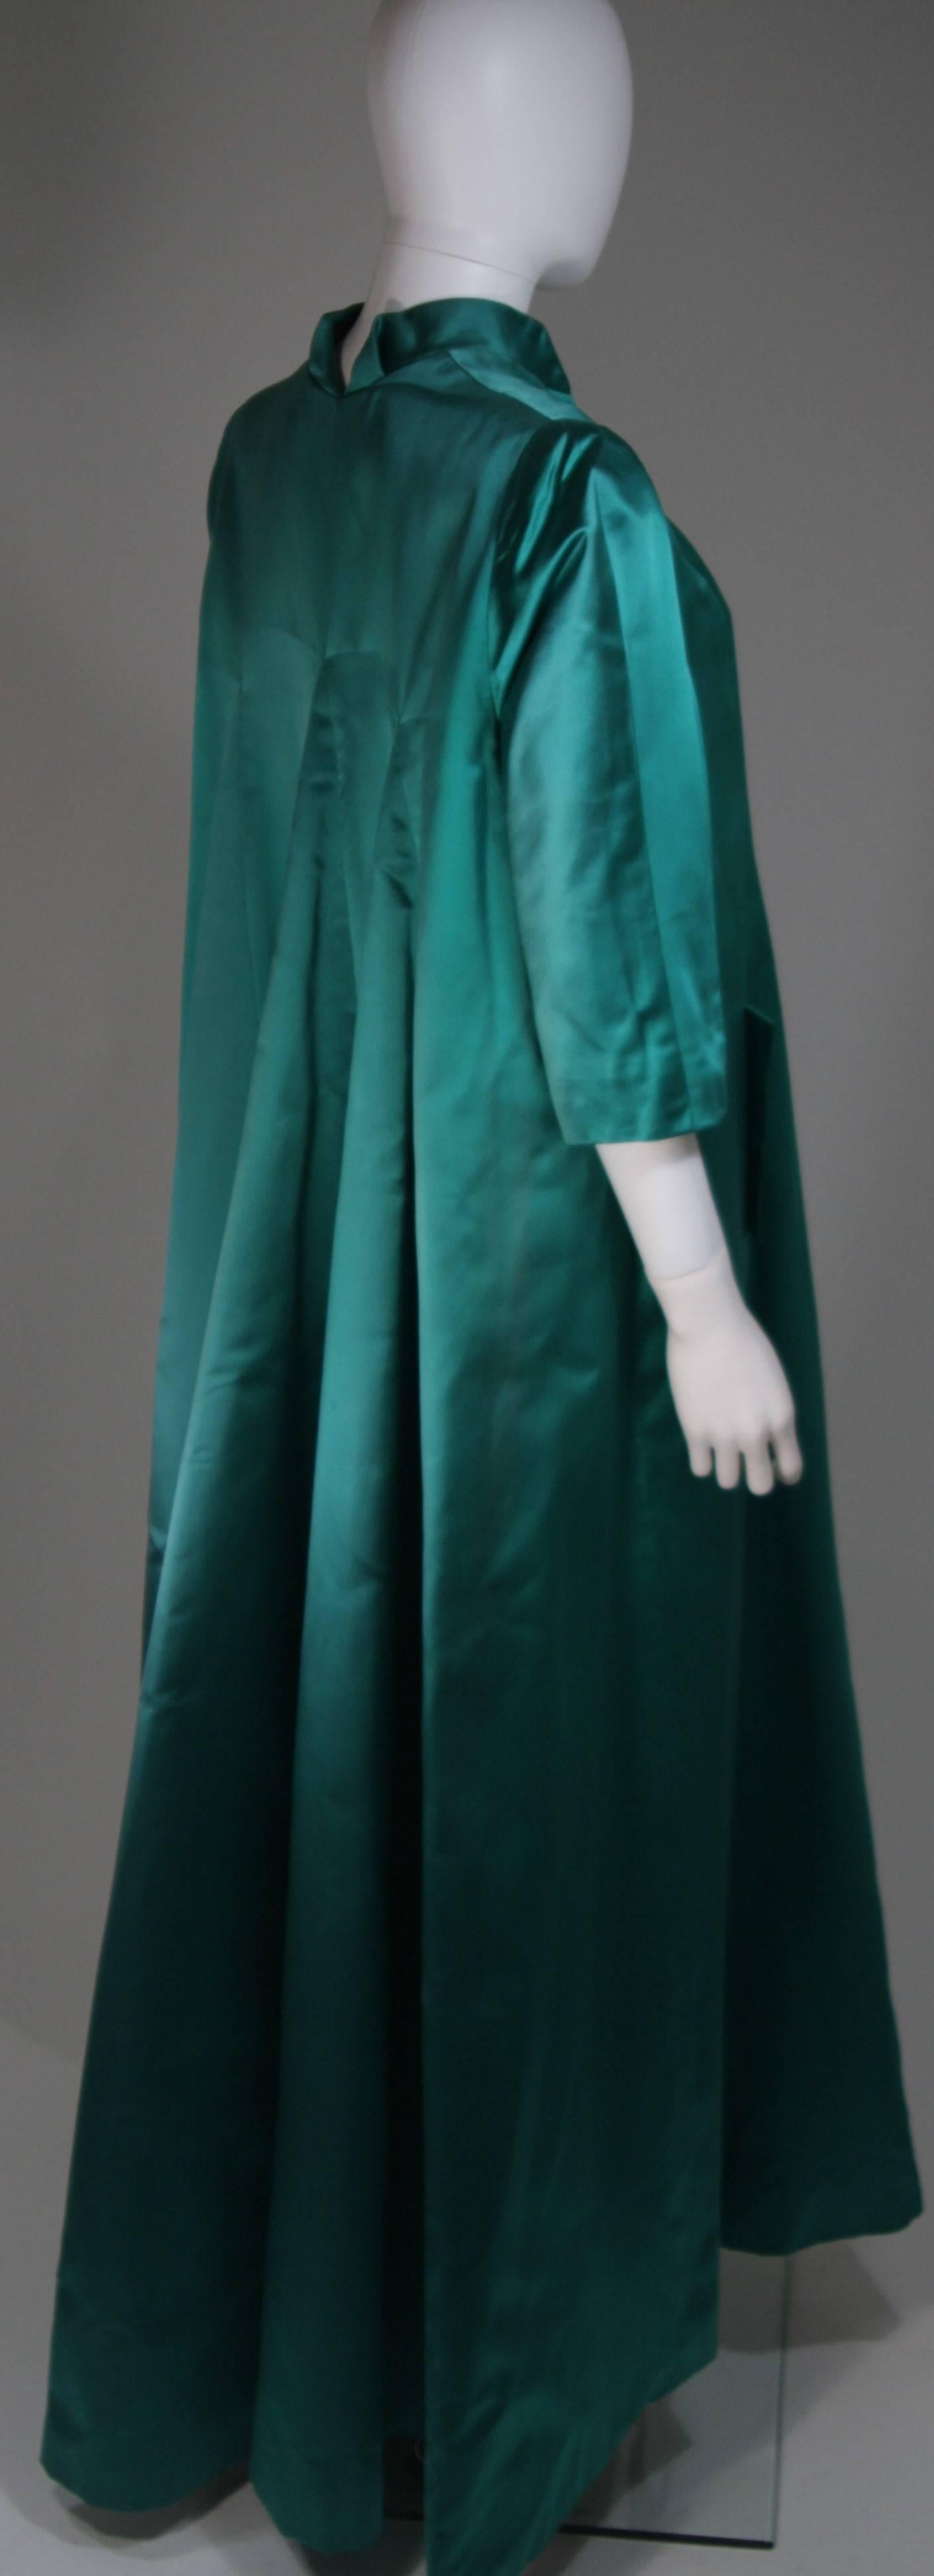 Galanos Green Silk Opera Coat Size Small For Sale 1